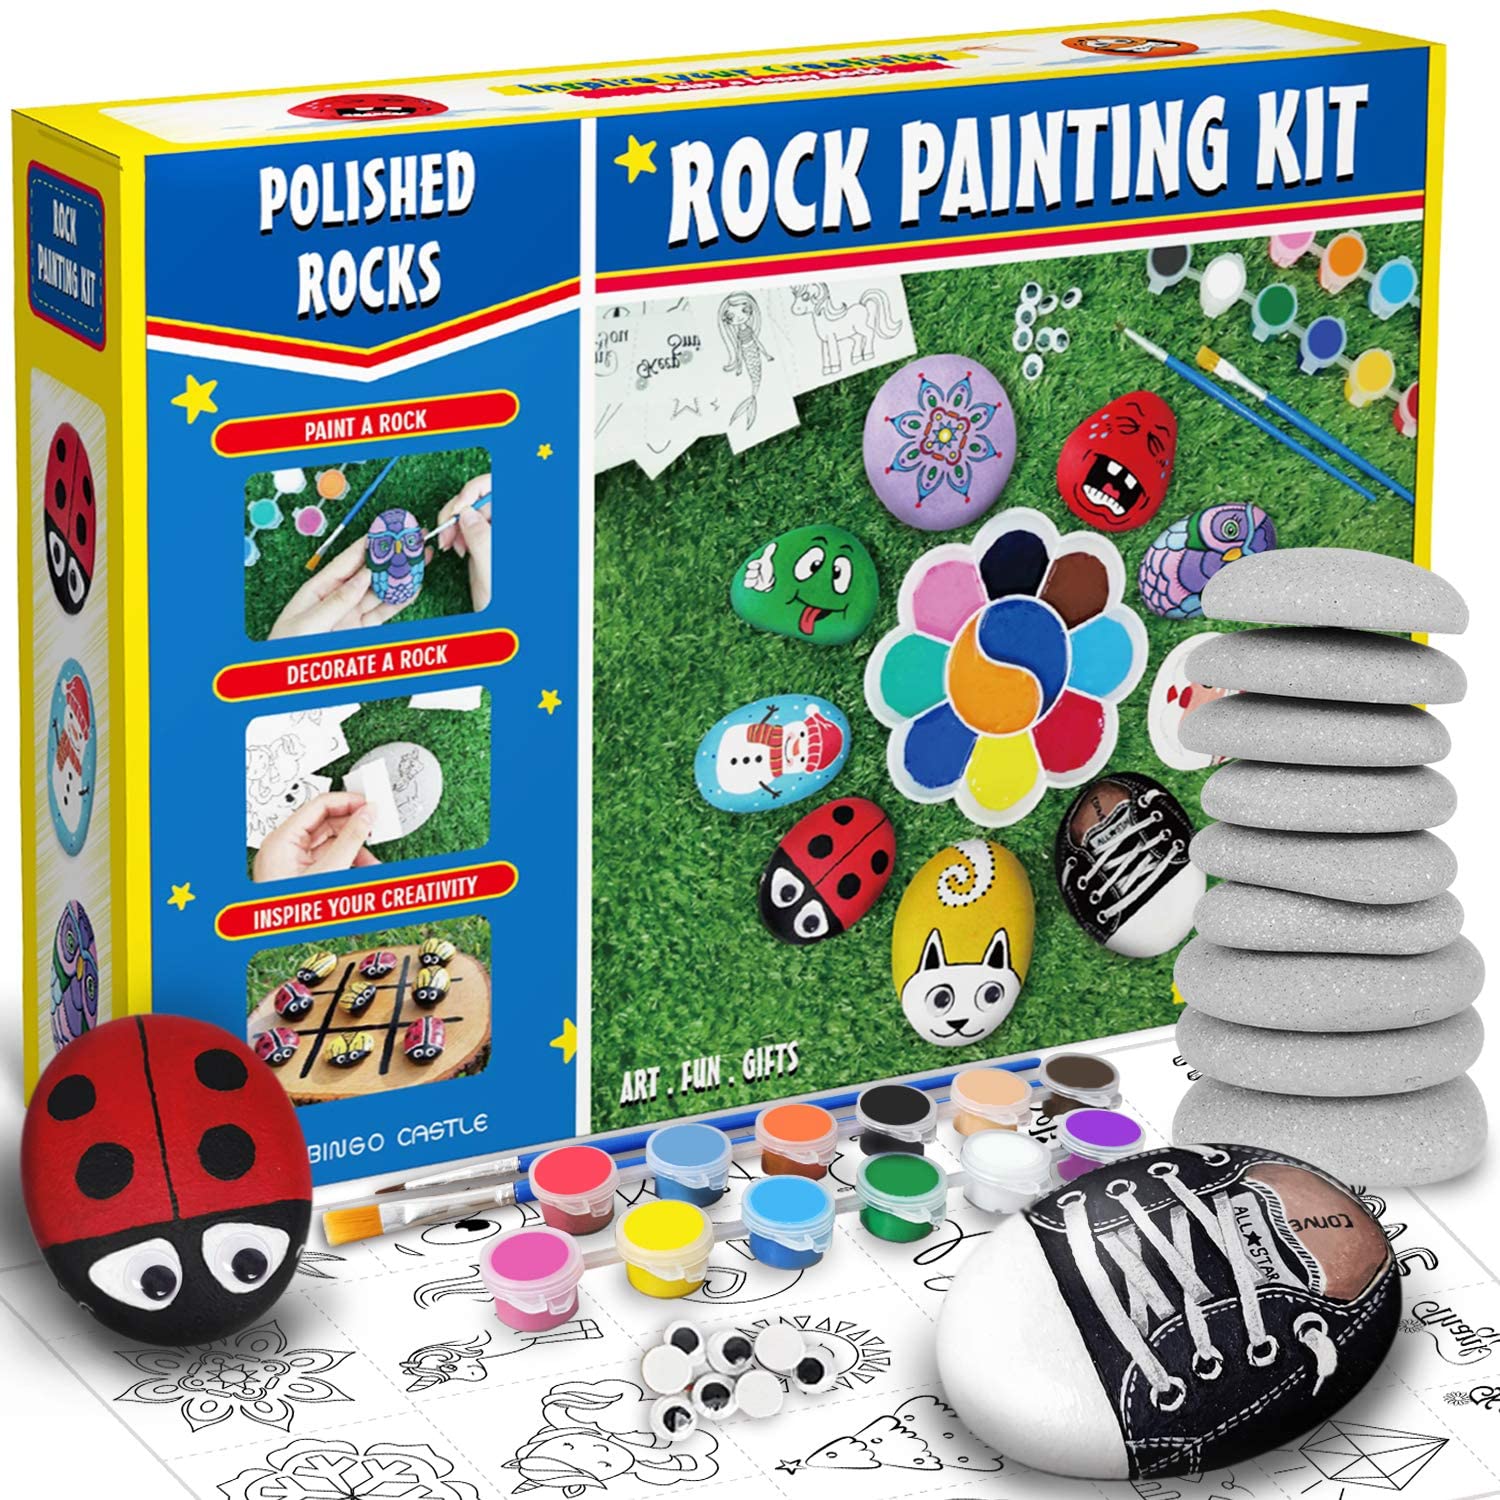 Bingo Castle Rock Painting Kit – Big Polished White-Grey Rocks for